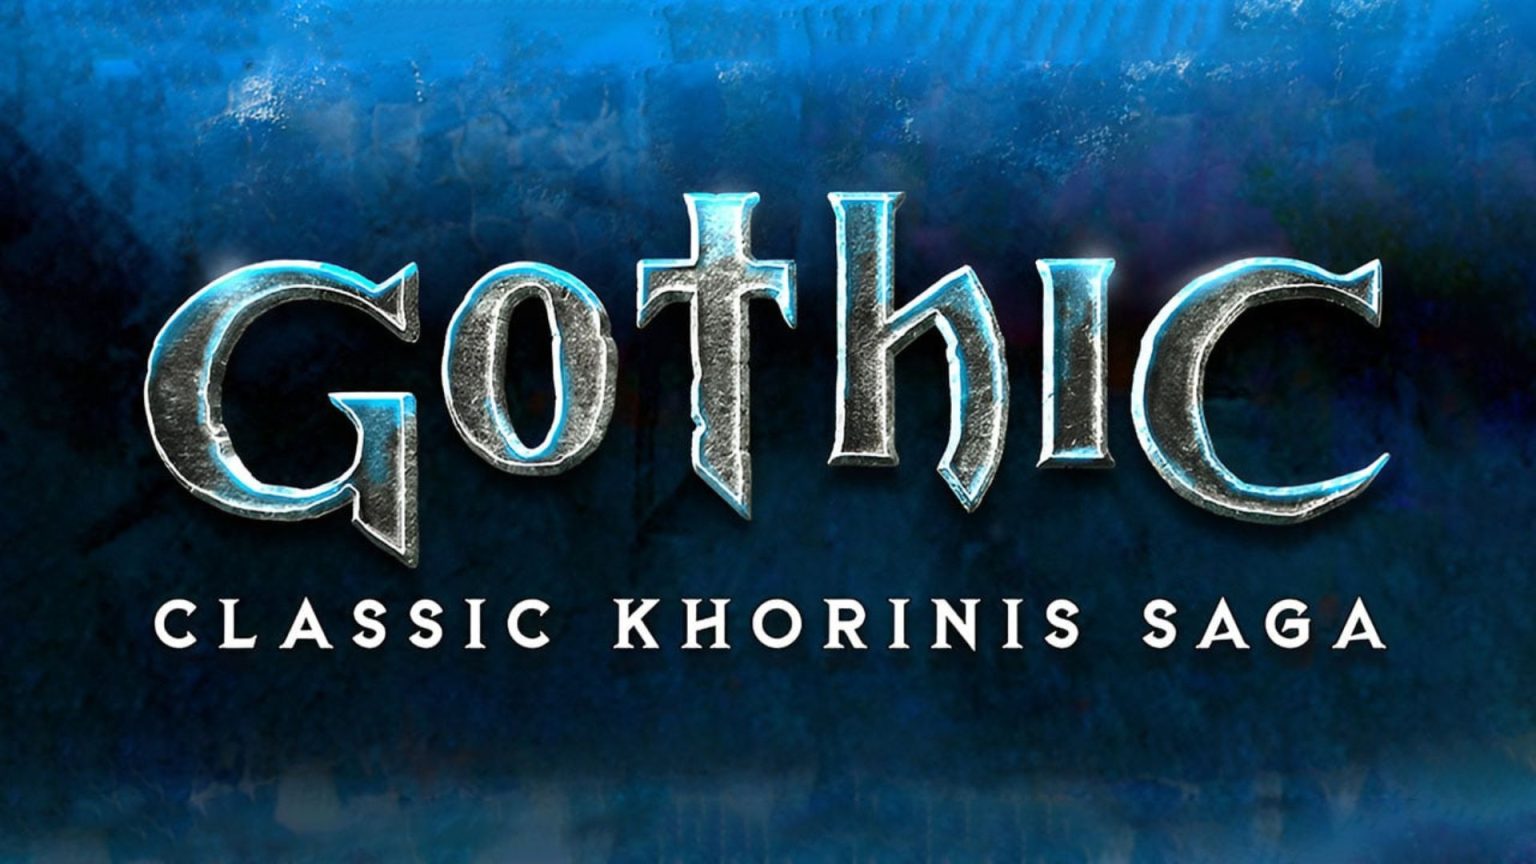 Gothic Classic Khorinis Saga Collection släpps på Nintendo Switch i juni